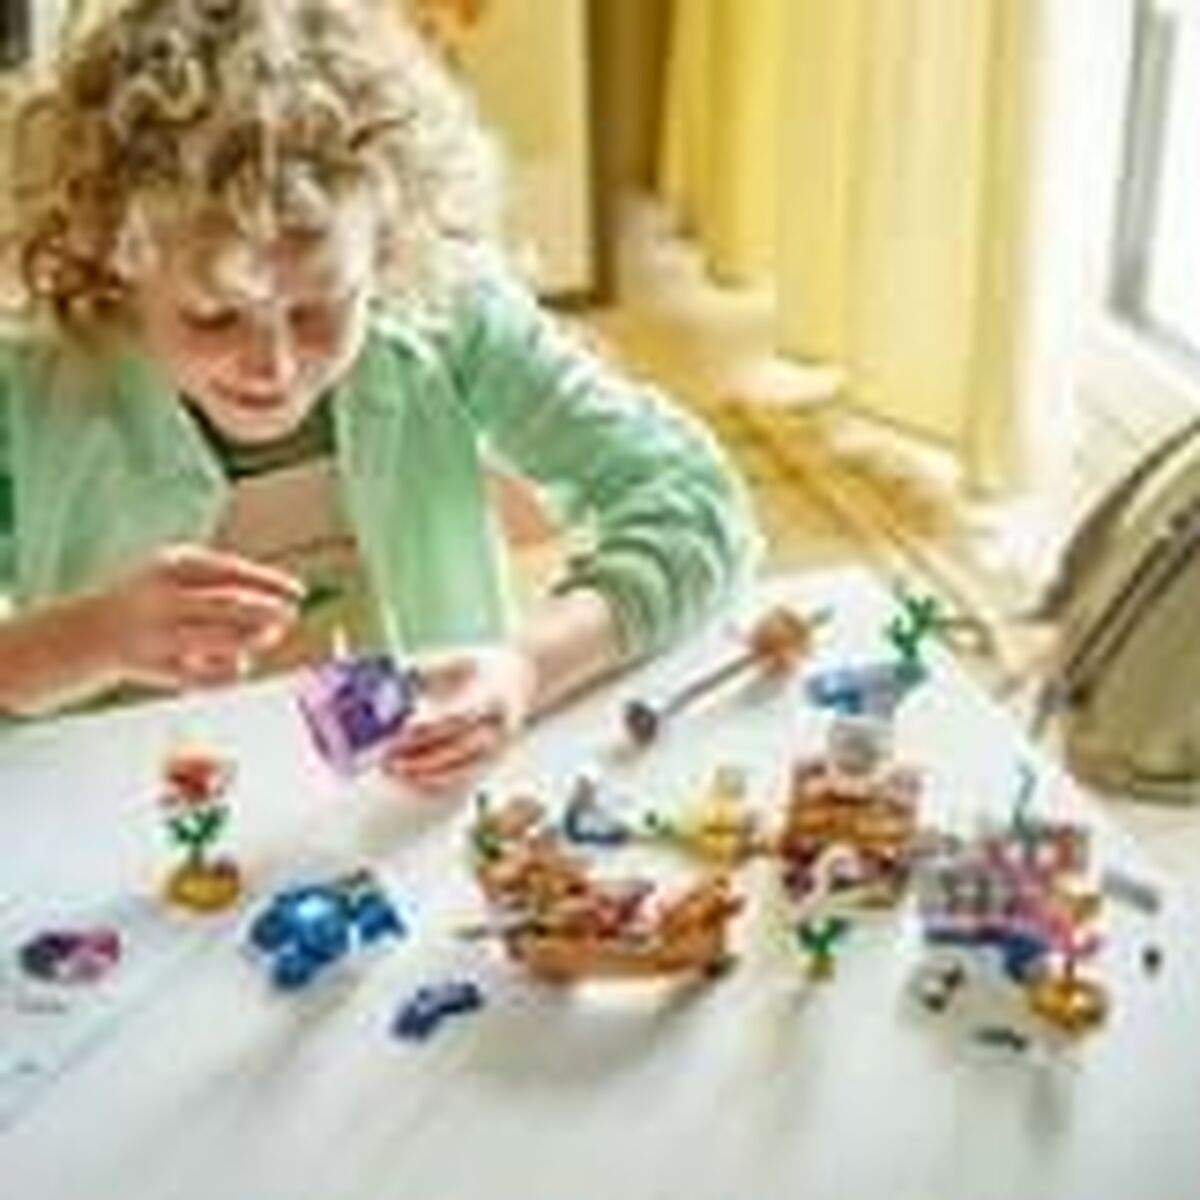 Playset Lego - Lego - Jardin D'Eyden - jardindeyden.fr